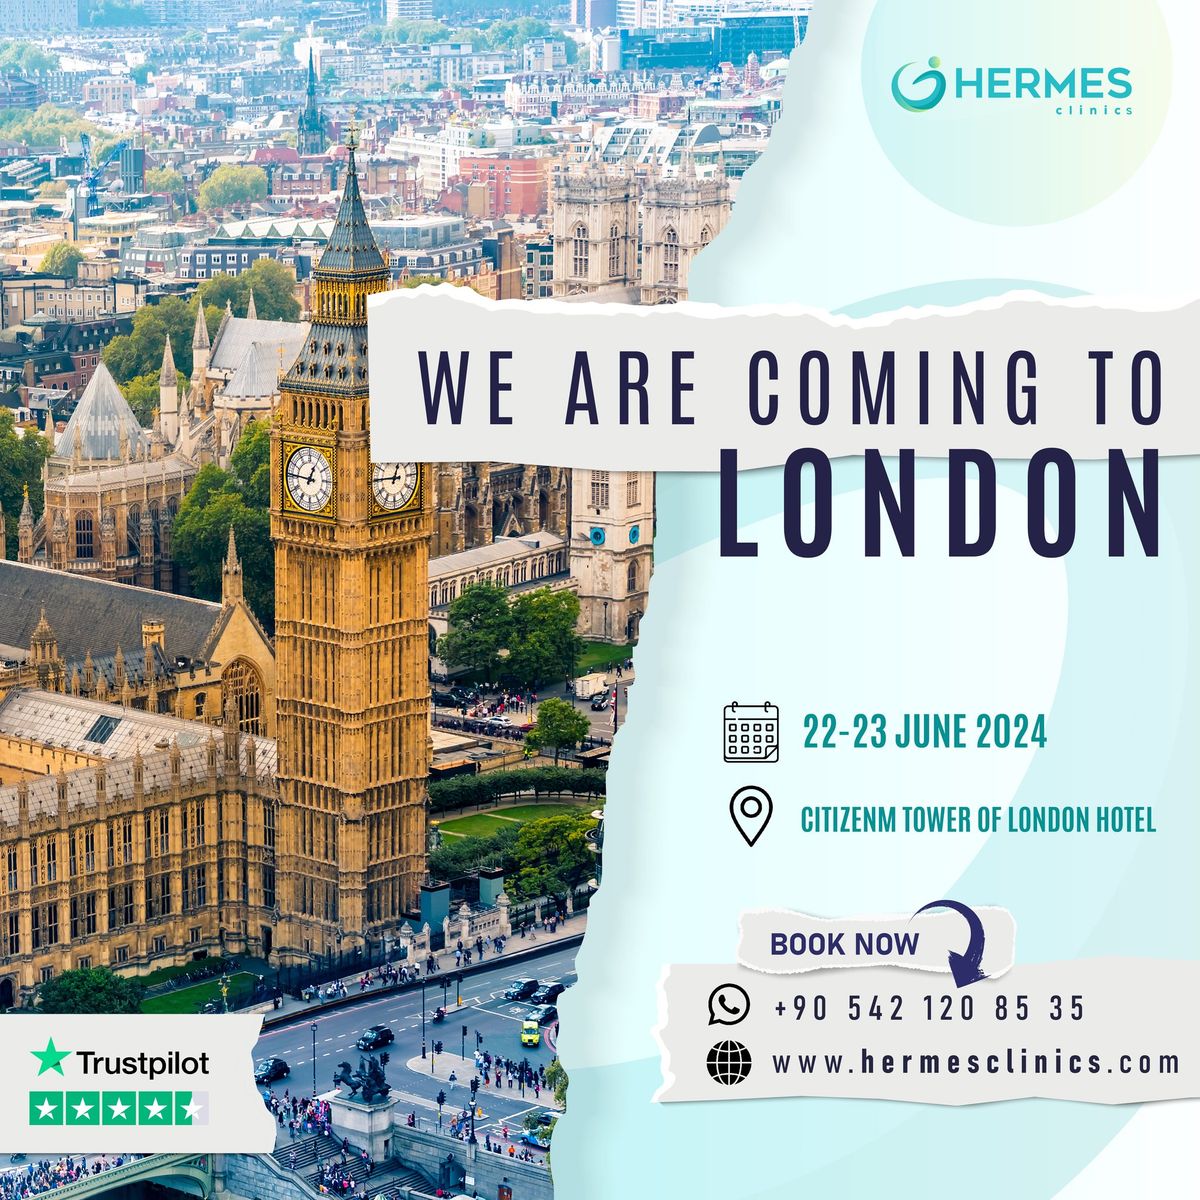 Hermes Clinics- London Roadshow